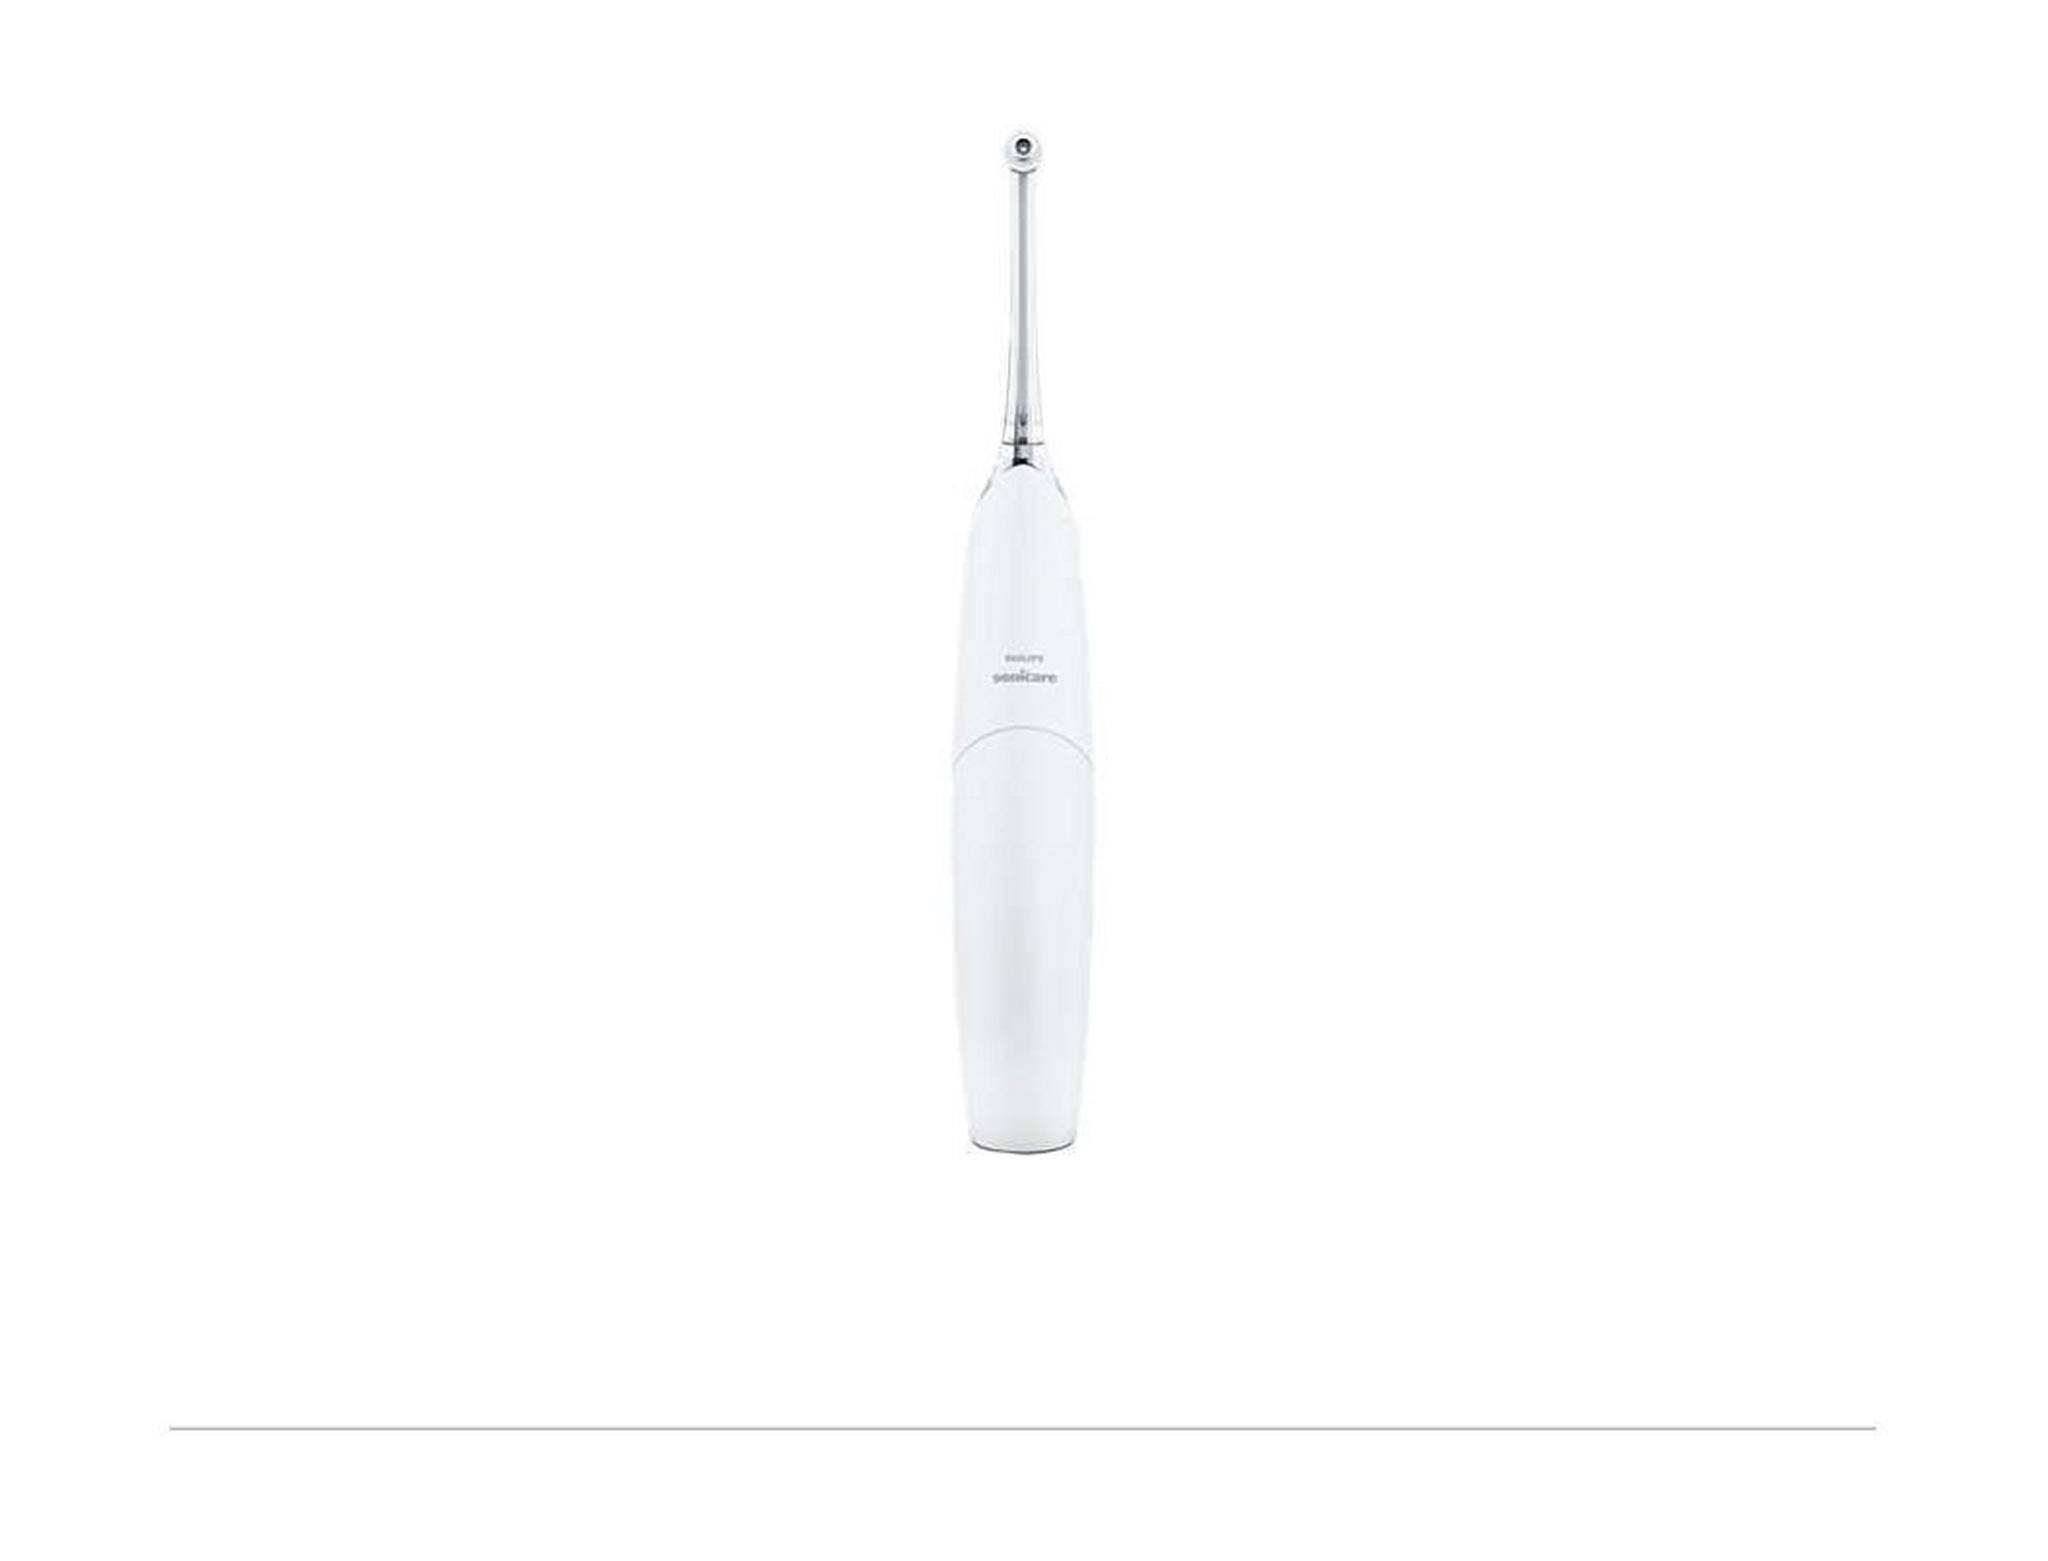 Philips Sonicare AirFloss Ultra Pro Interdental Cleaner (HX8331/01) – White